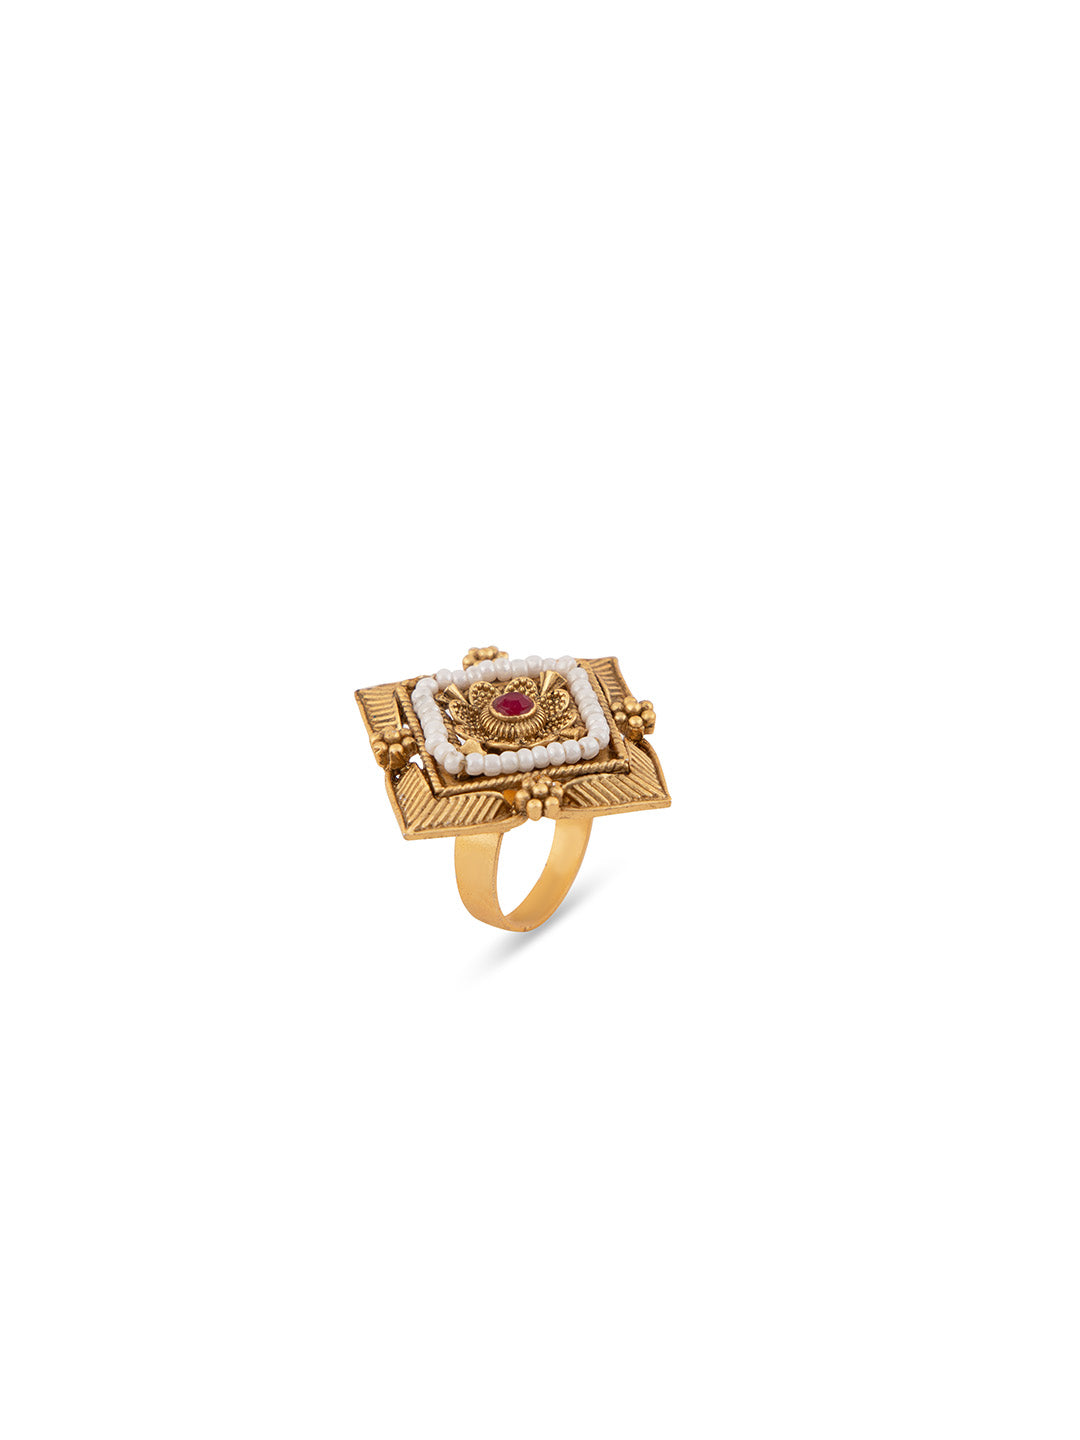 Priyaasi Square Shaped Gold Plated Floral Ring